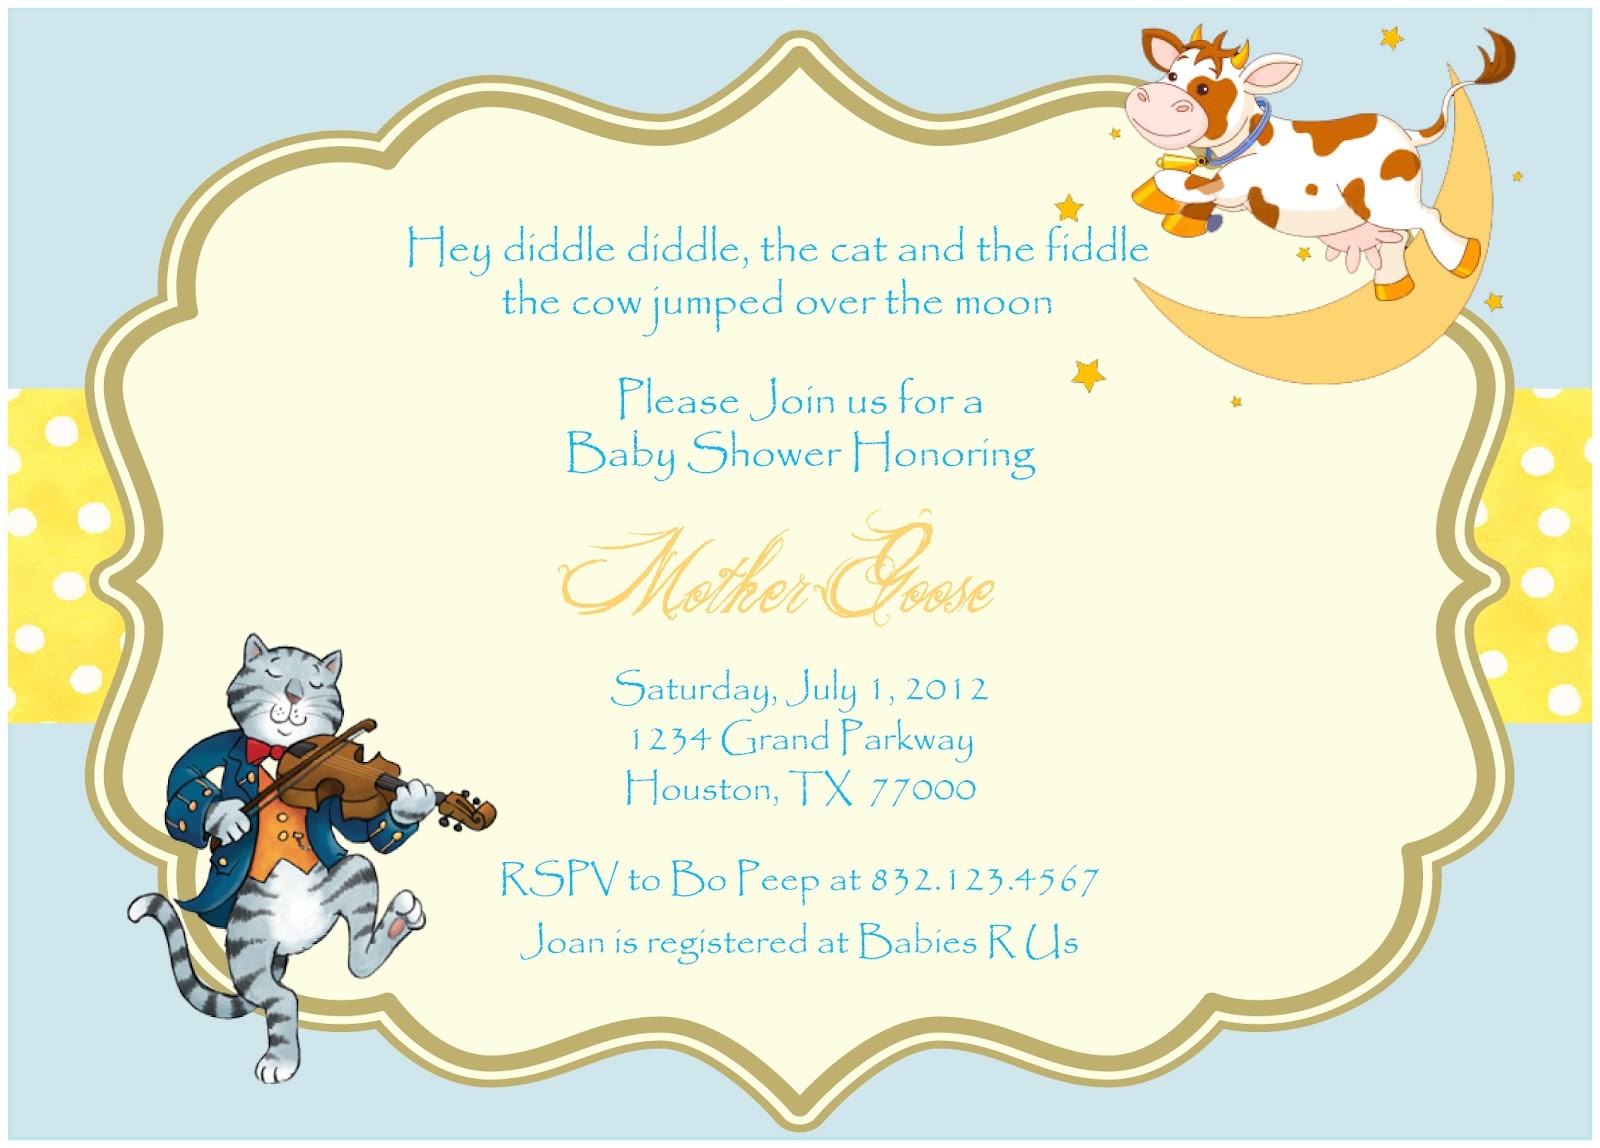 nursery rhyme baby shower invitations